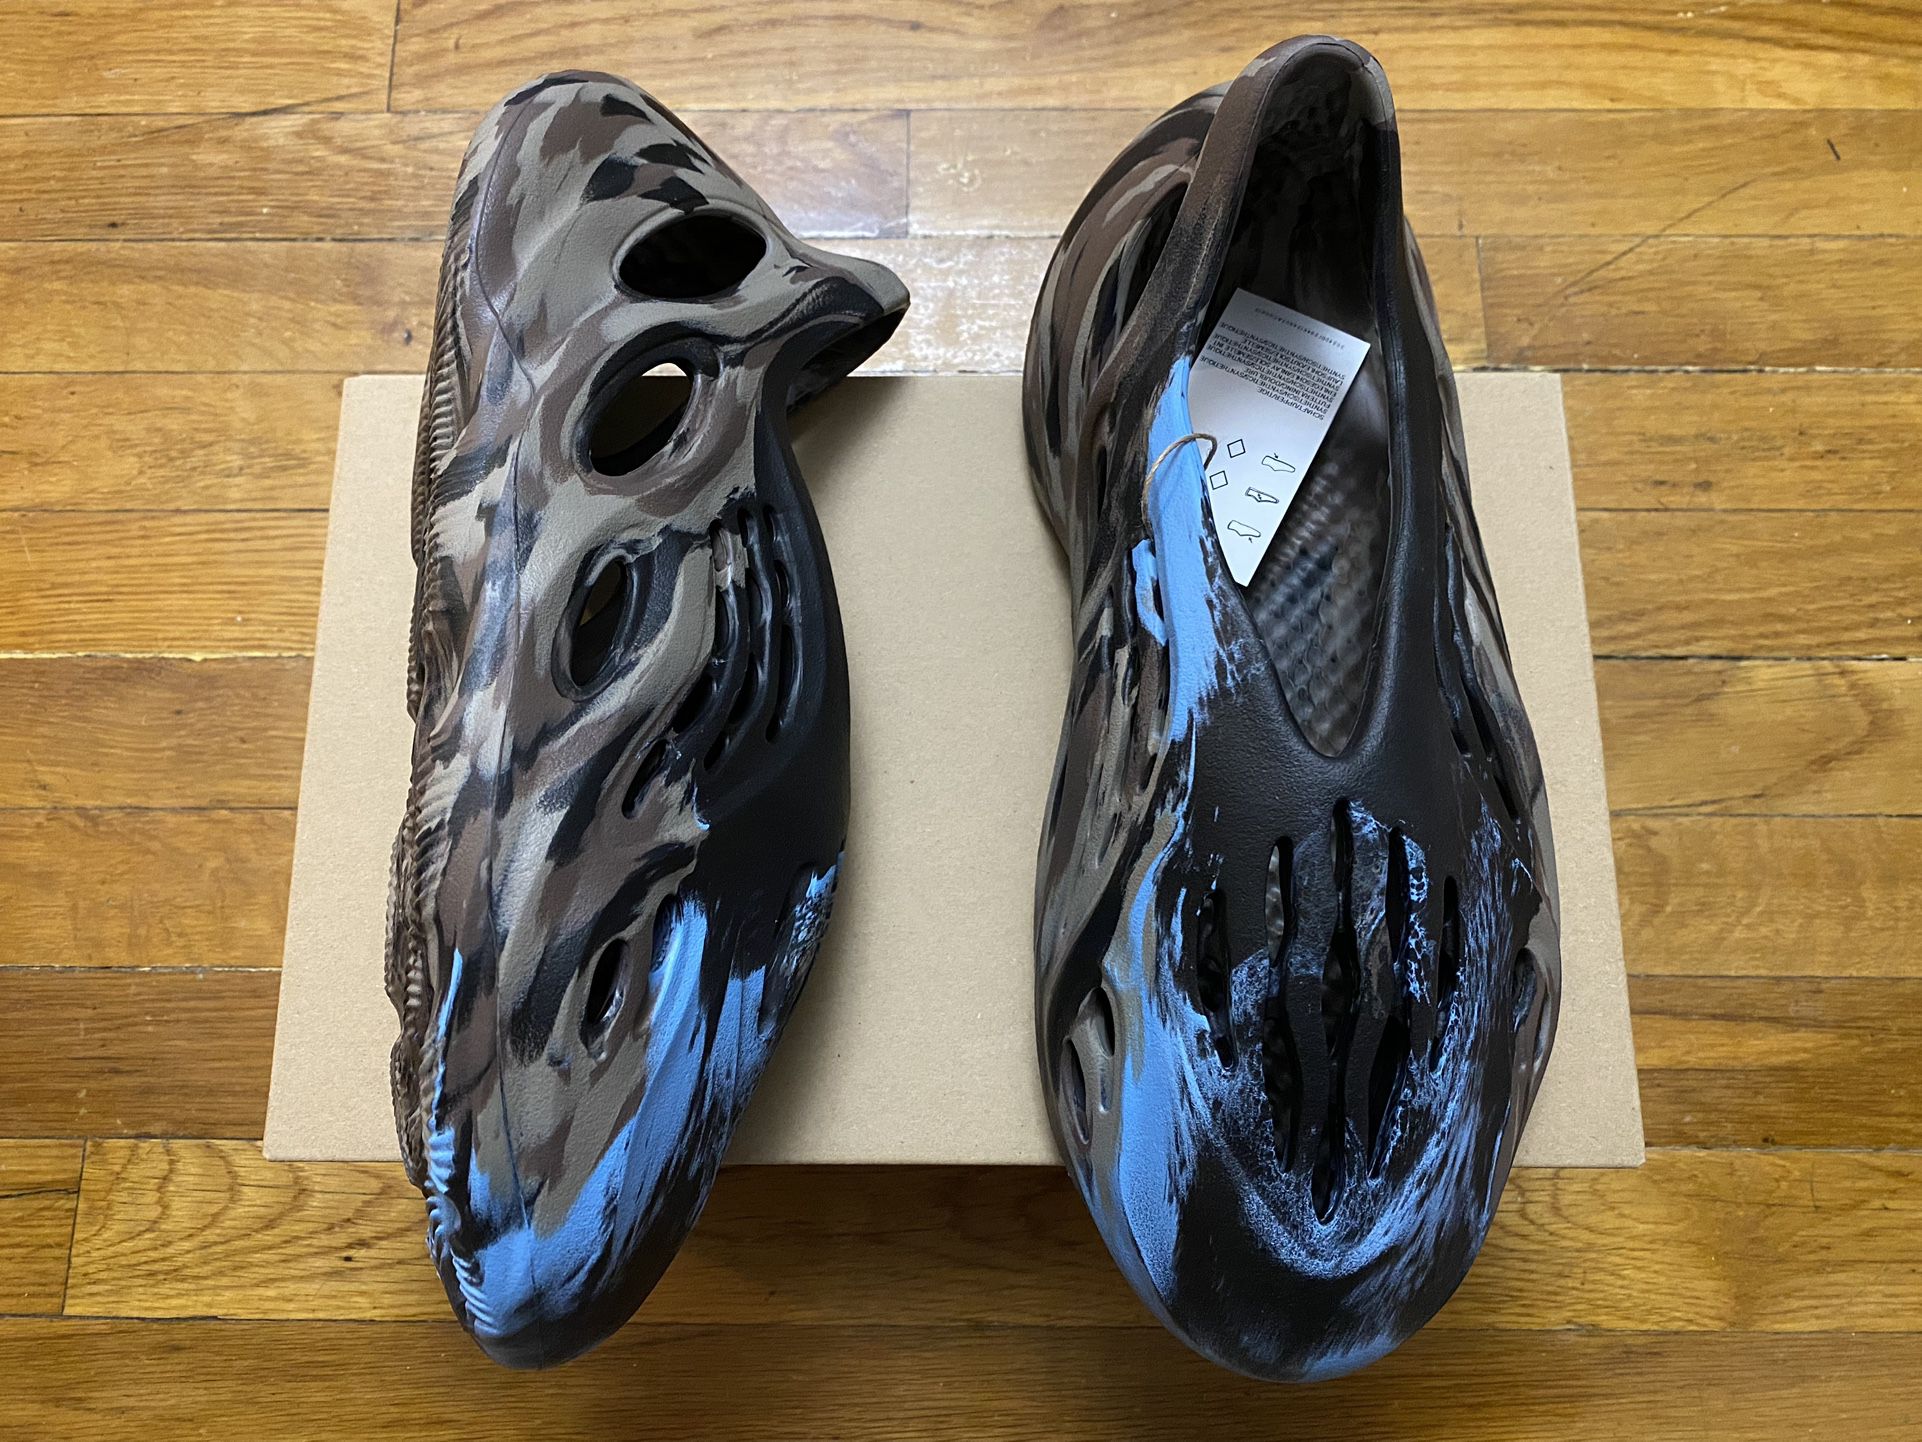 Size 10, 12 - Adidas Yeezy Foam Runner Mx Cinder Black/Gray